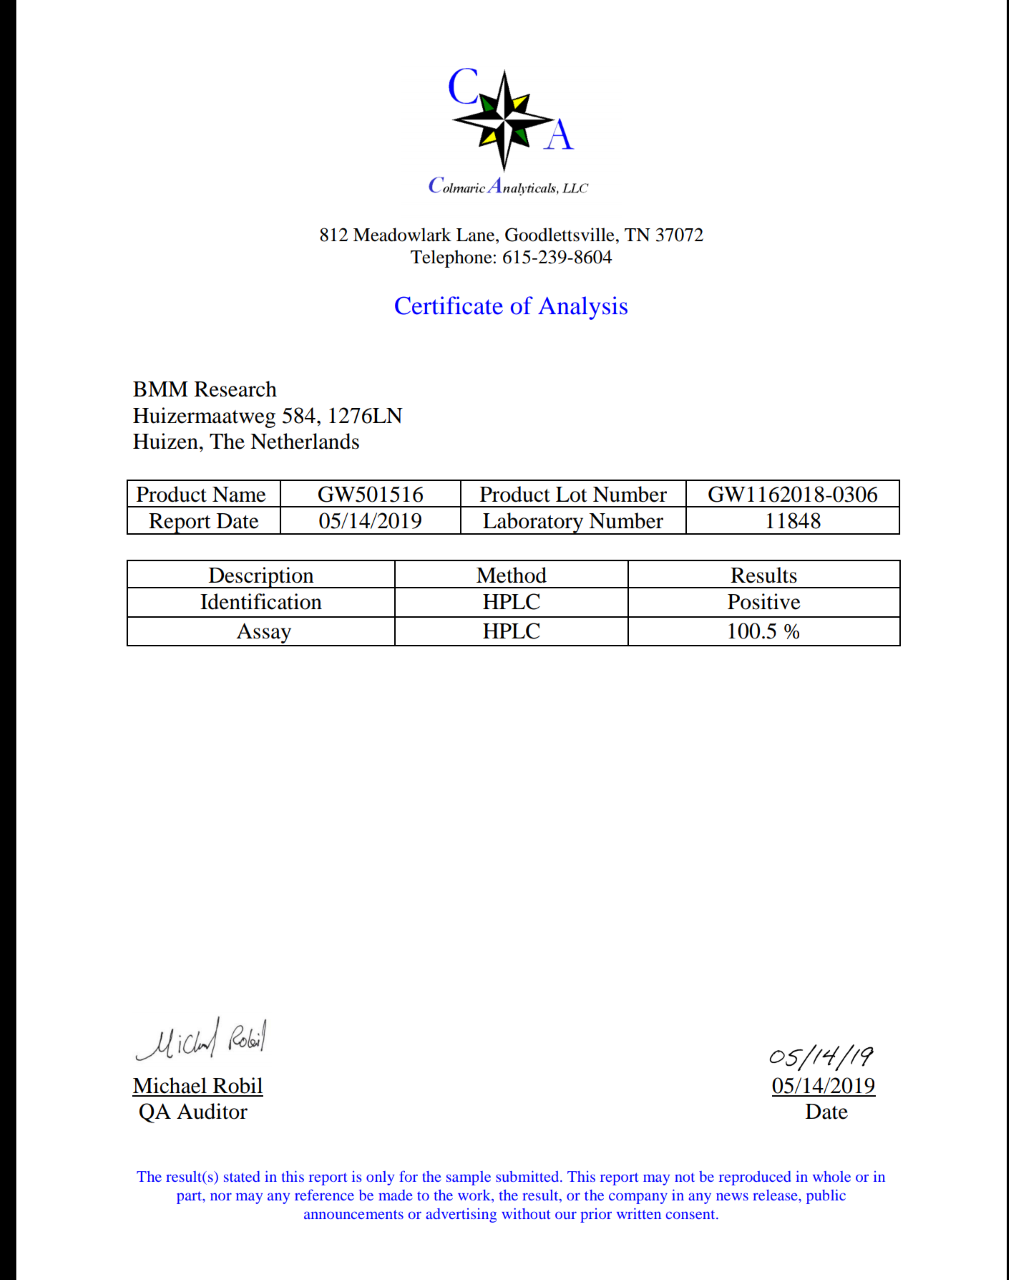 GW501516 - Certificate of Analysis 2